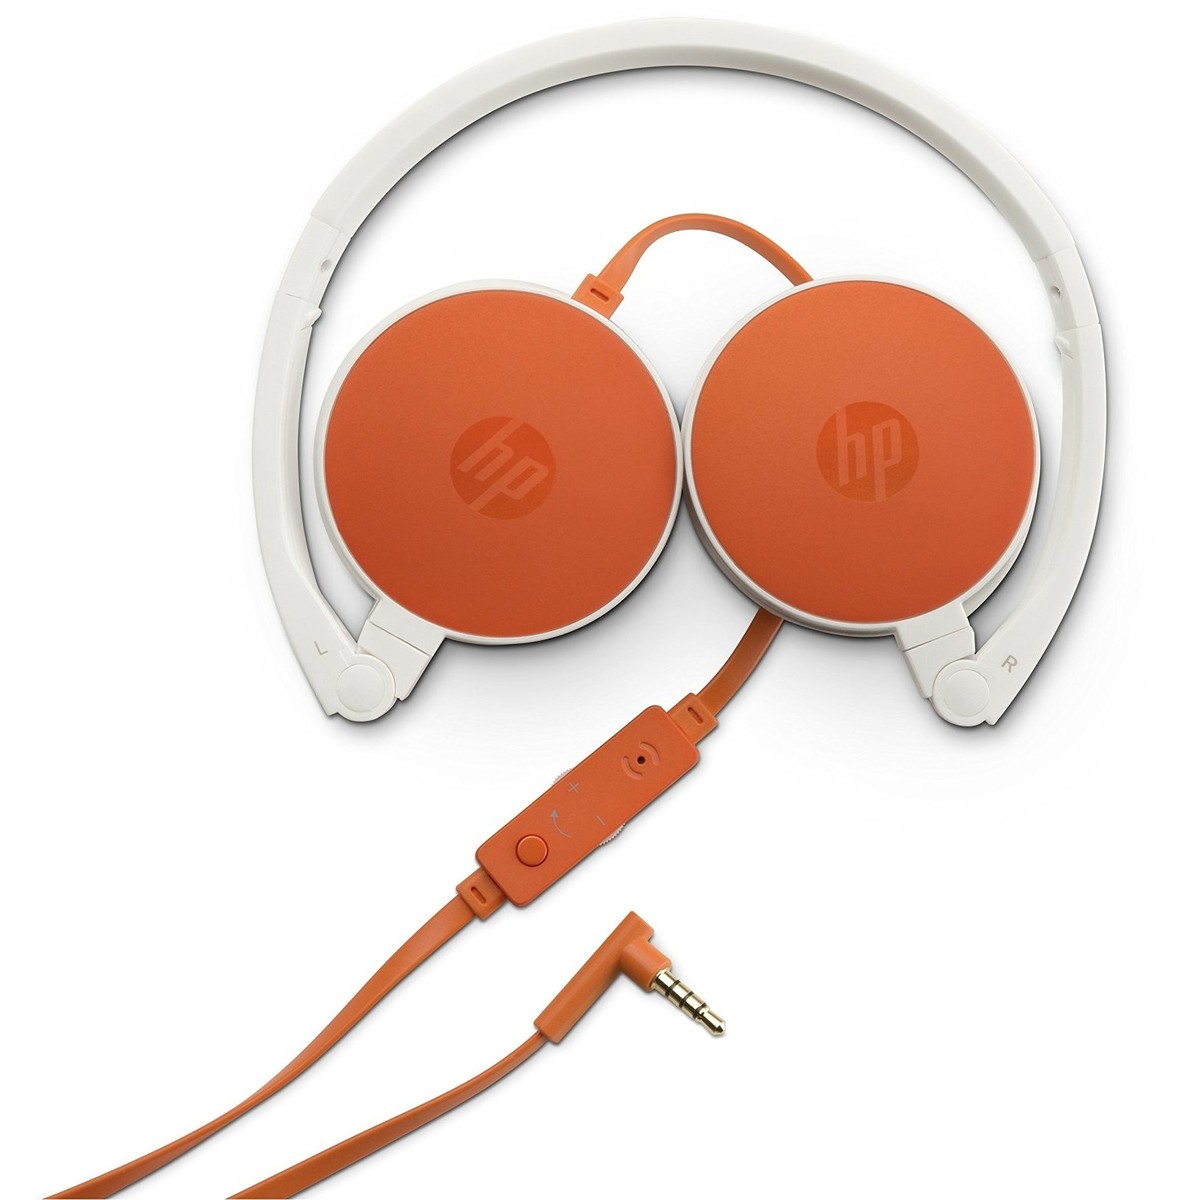 HP Headset H2800-F6J05AA Orange